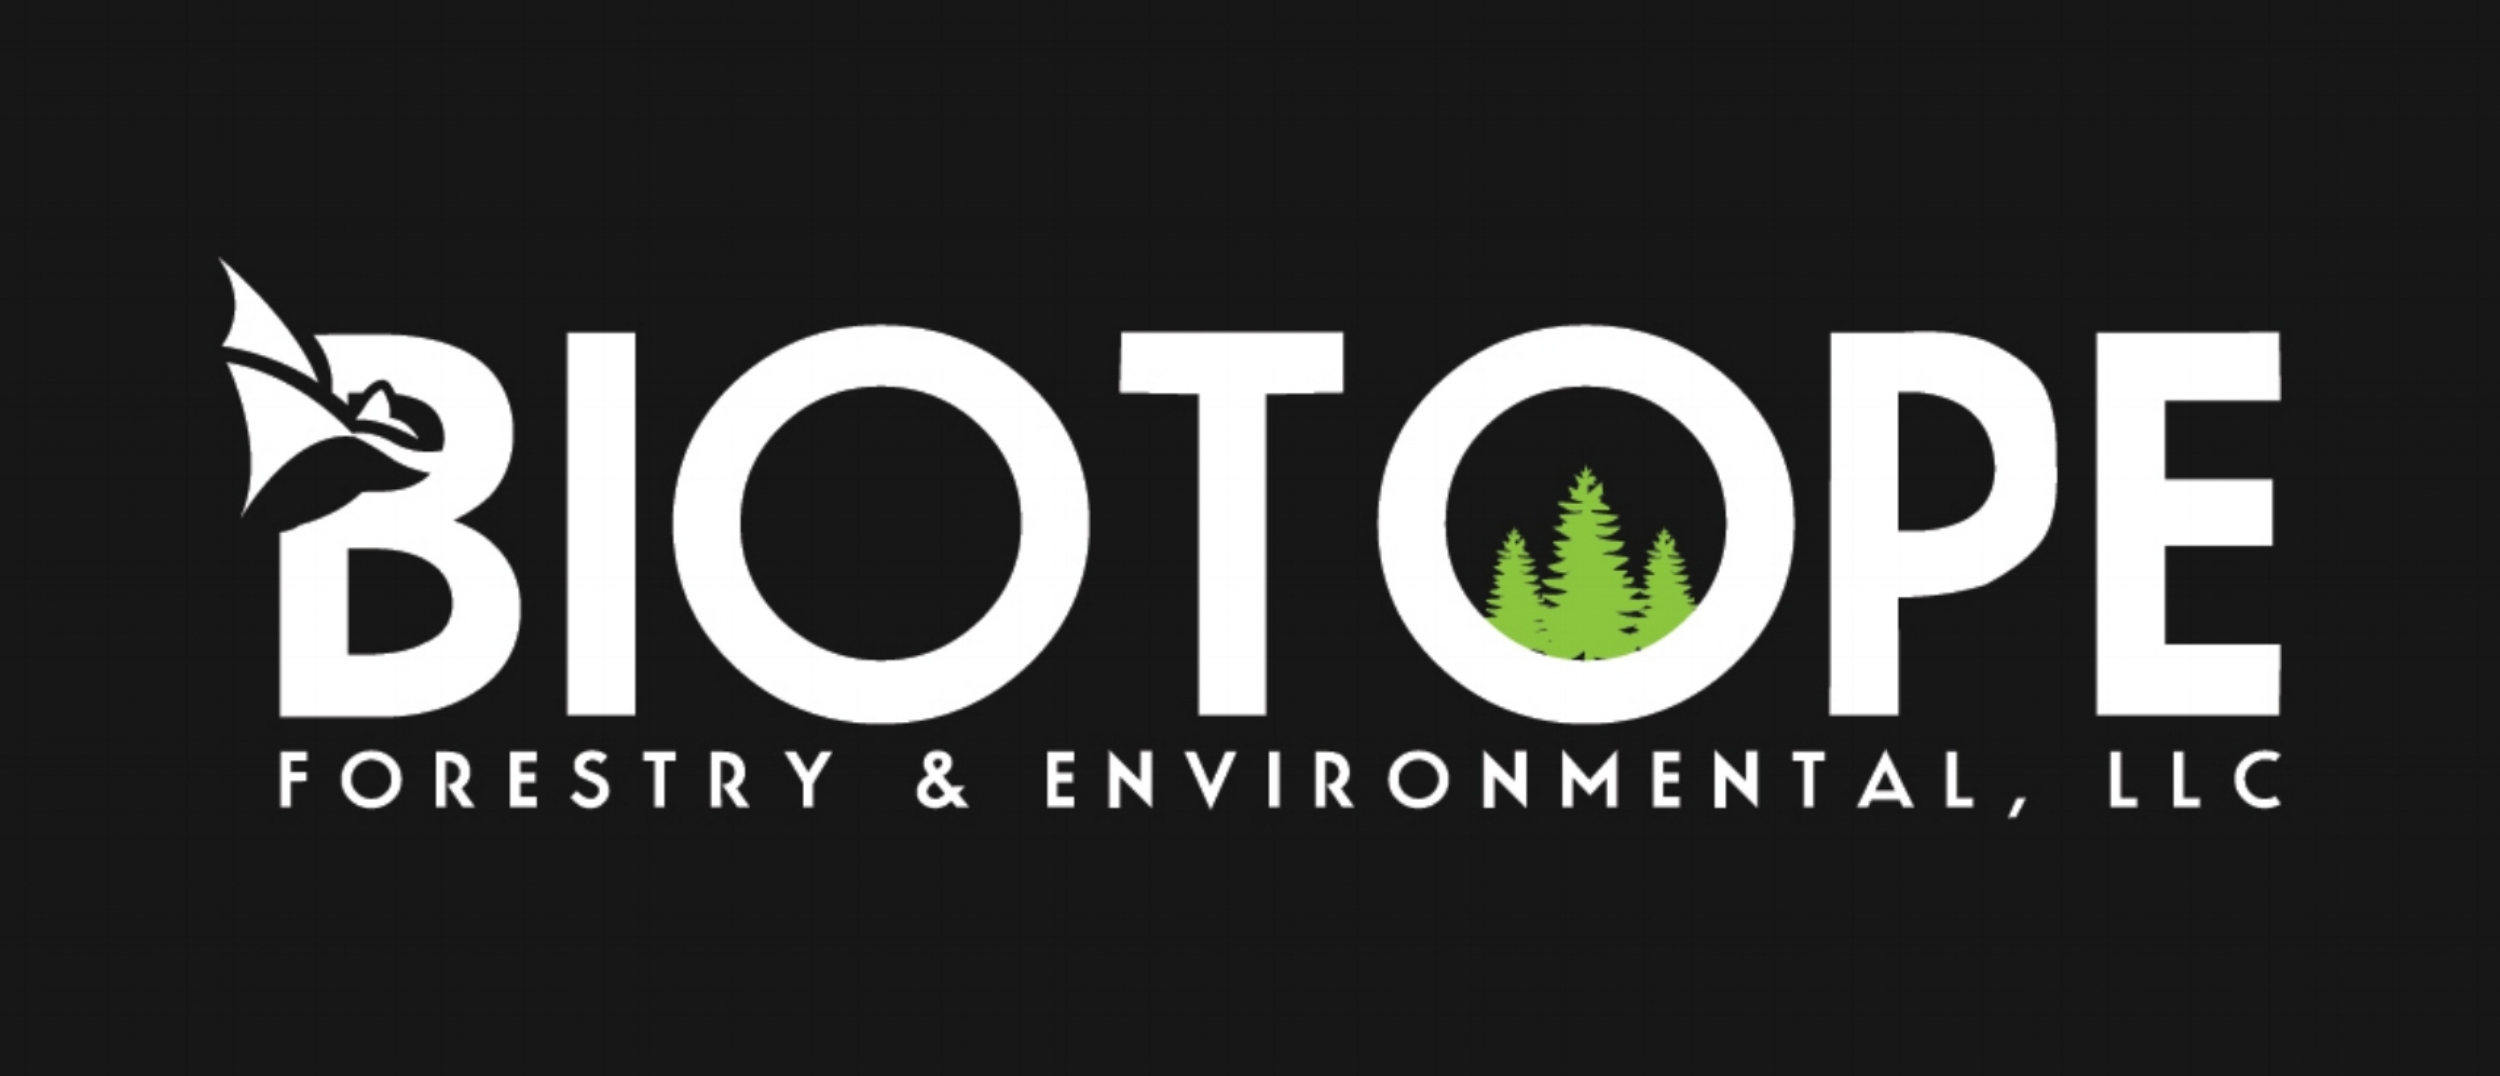 Biotope Forestry &amp; Environmental, LLC.